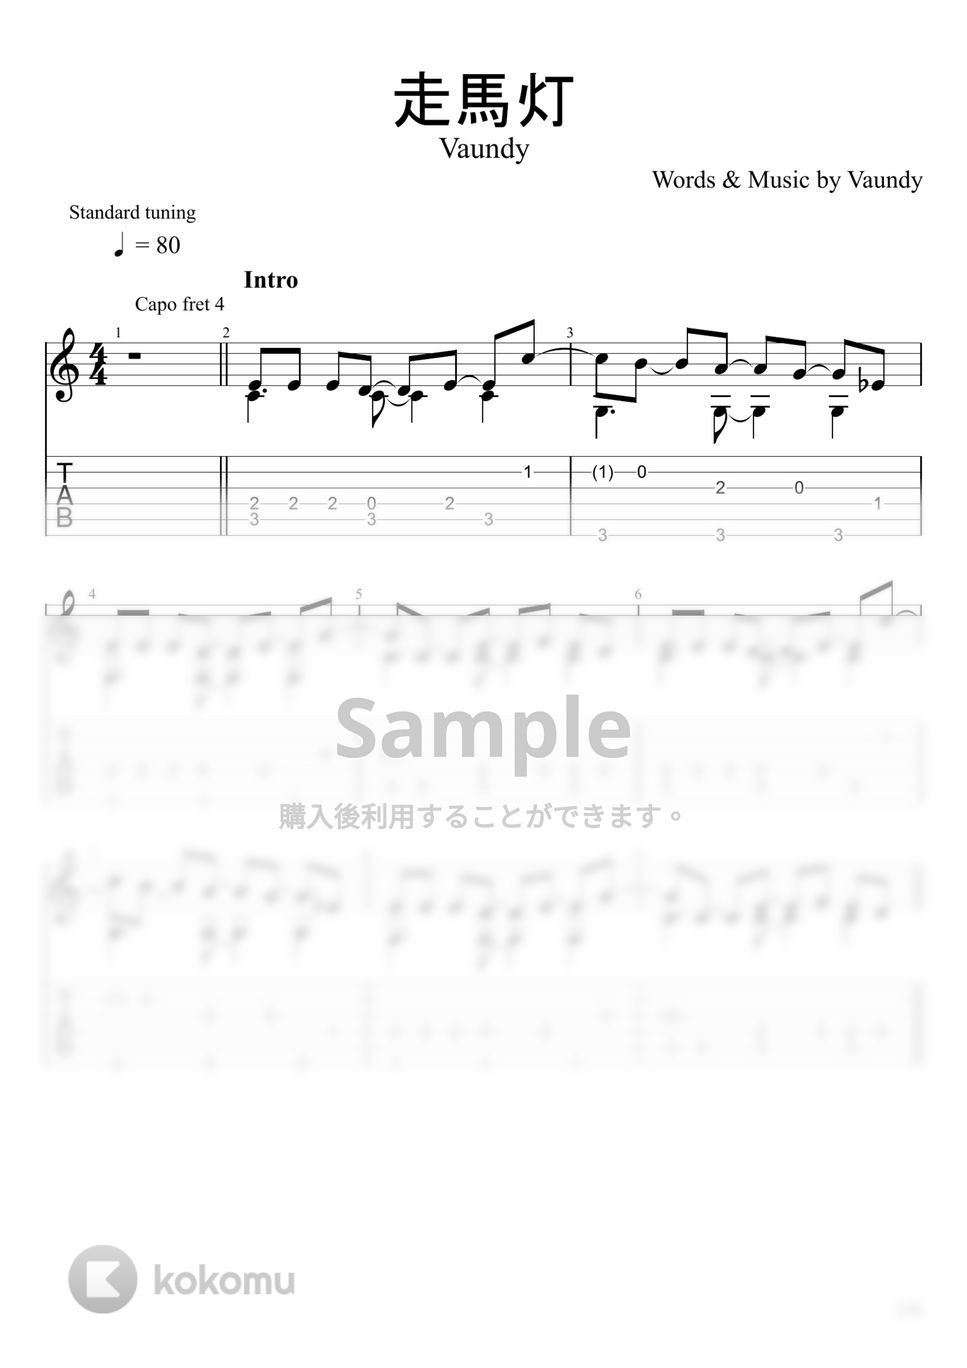 Vaundy - 走馬灯 (ソロギター) by u3danchou